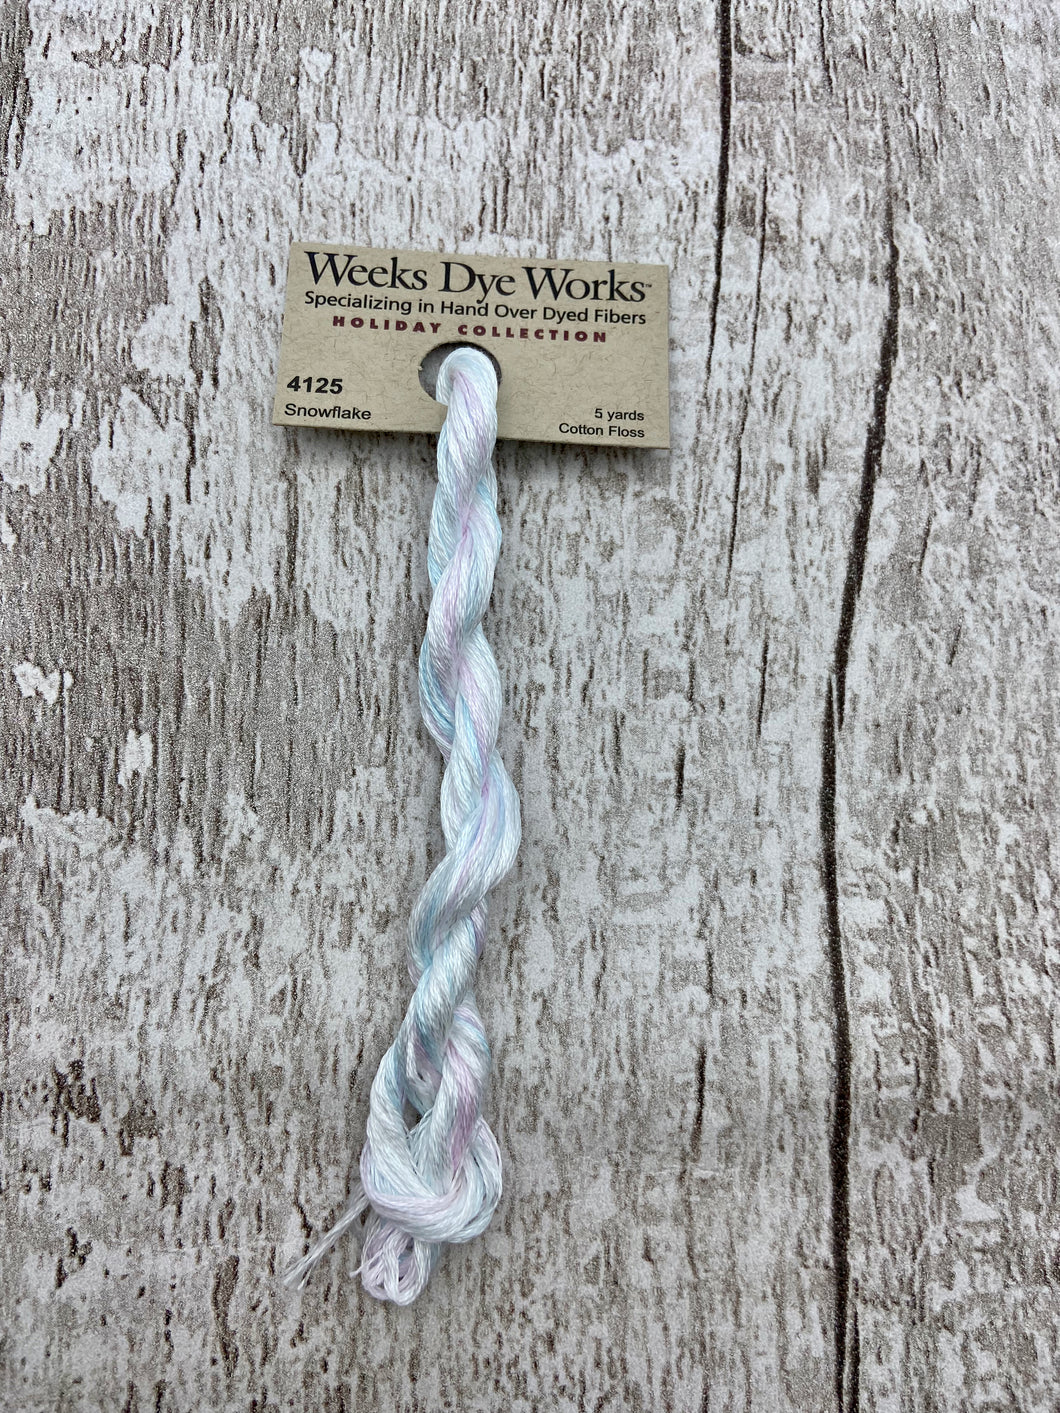 Snowflake (#4125) Weeks Dye Works, 6-strand cotton floss